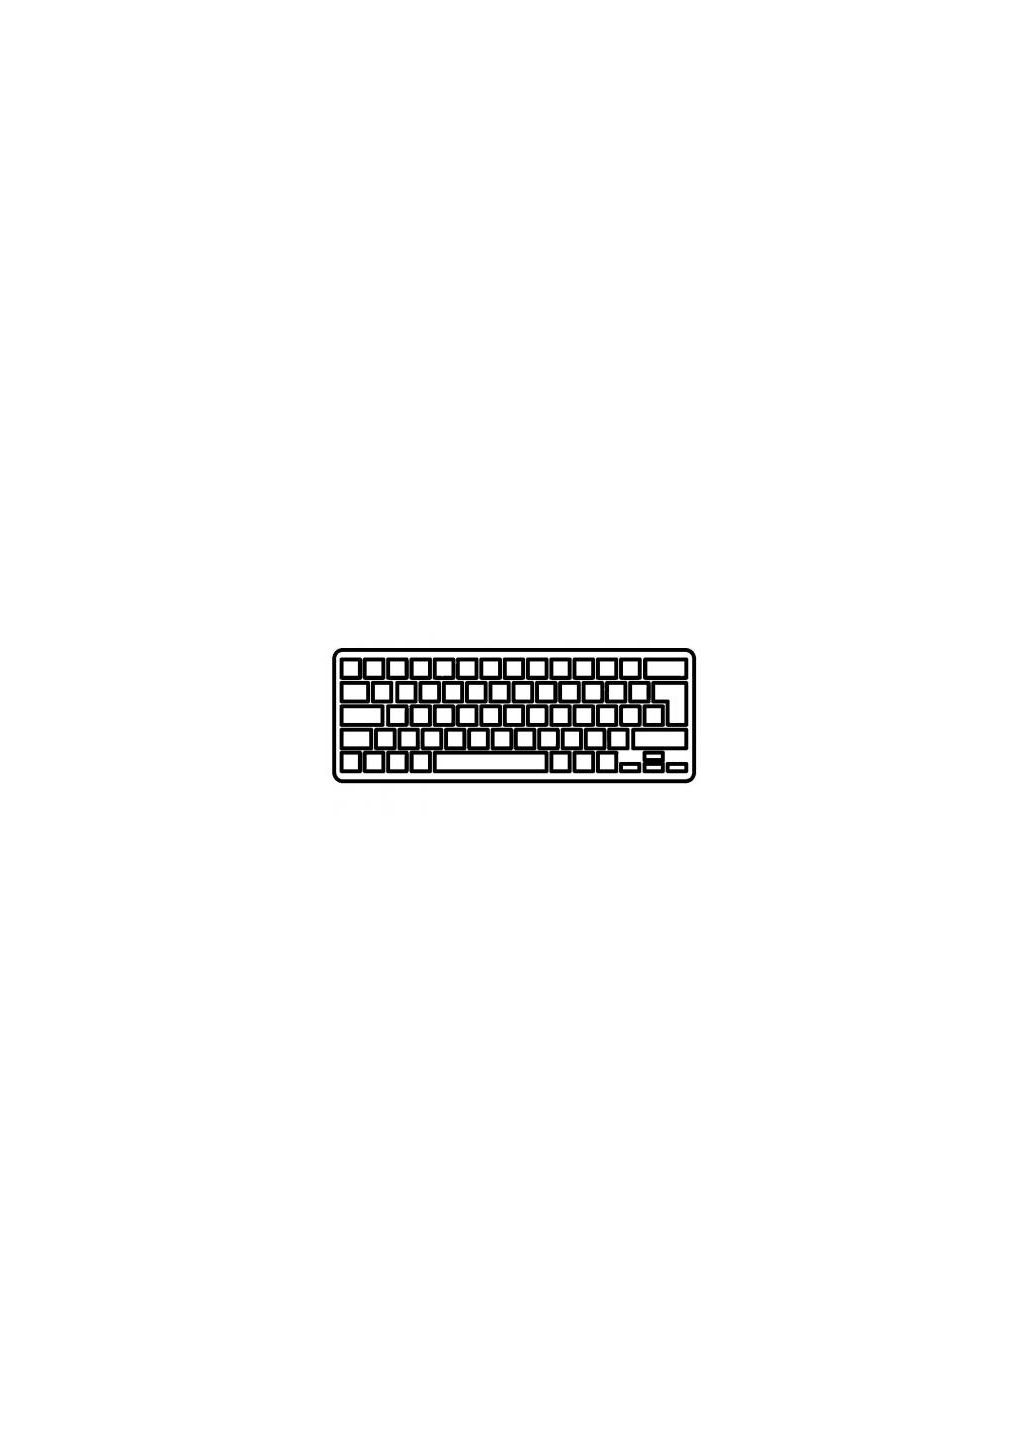 Клавиатура ноутбука (A43116) HP presario cq71/g71 черная ua (276707656)